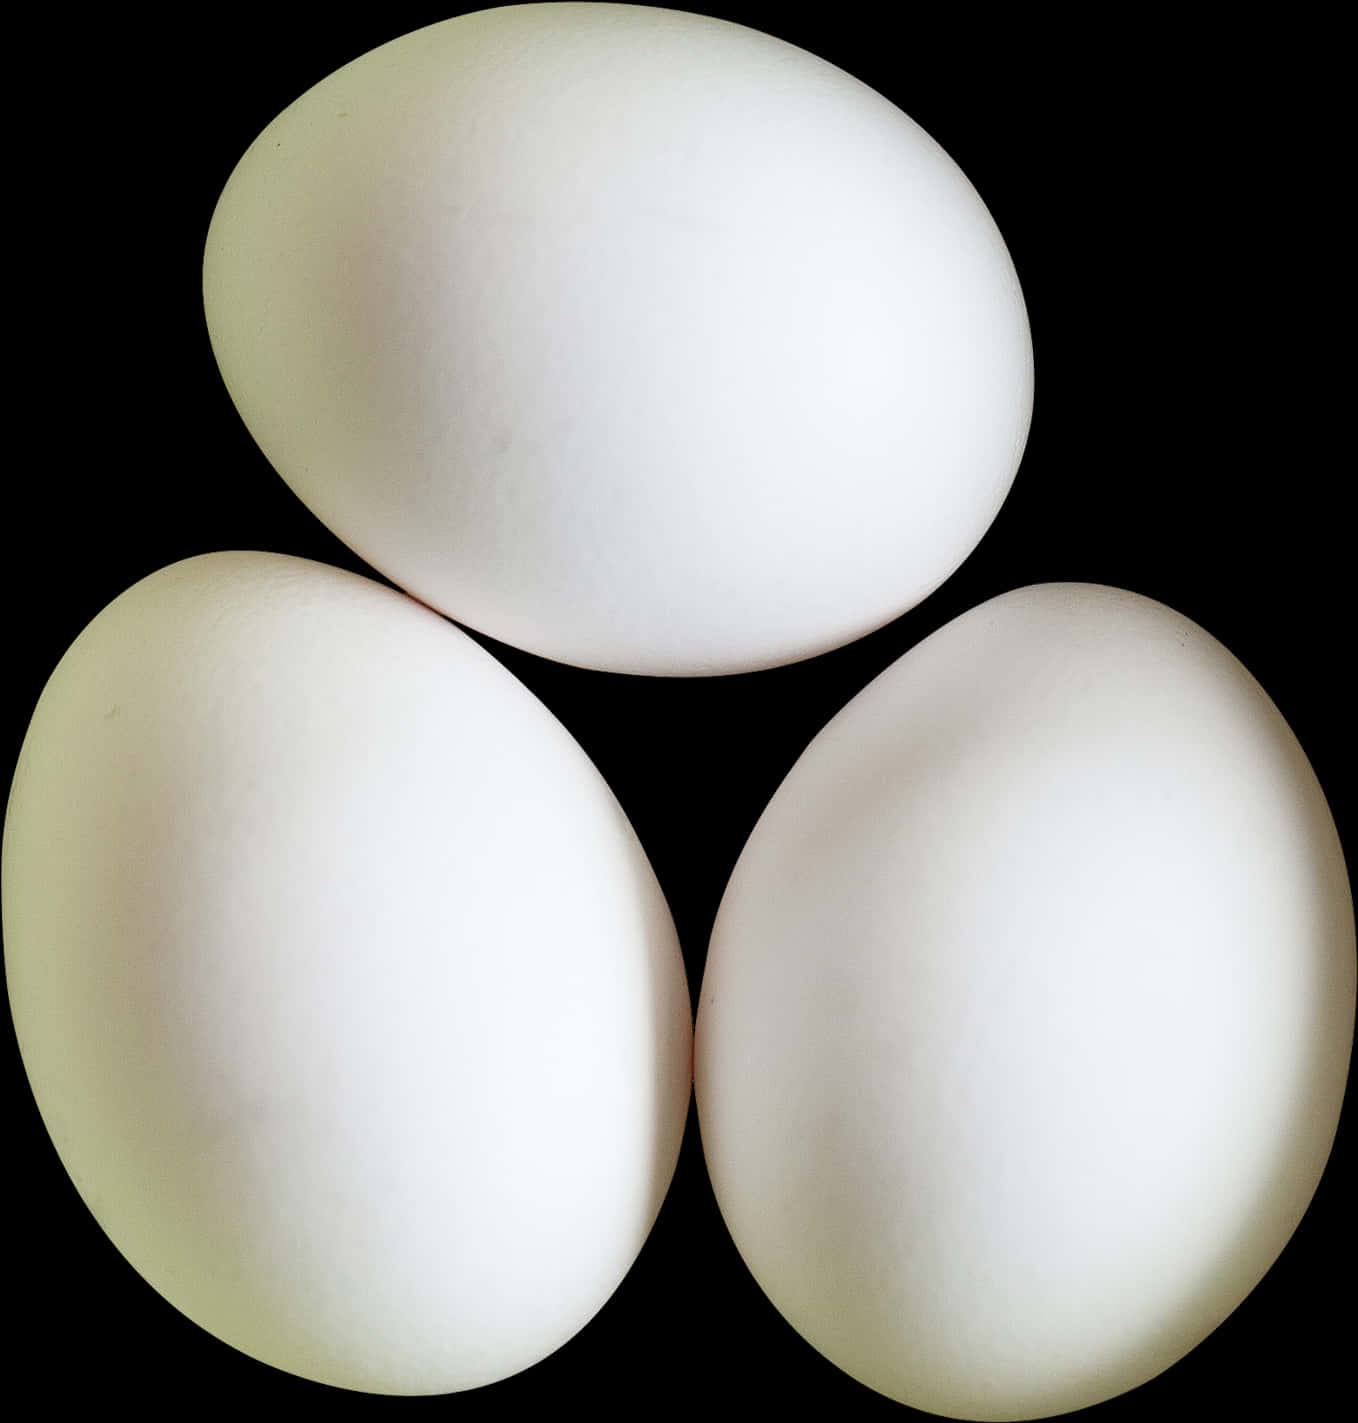 Three White Eggs Black Background PNG